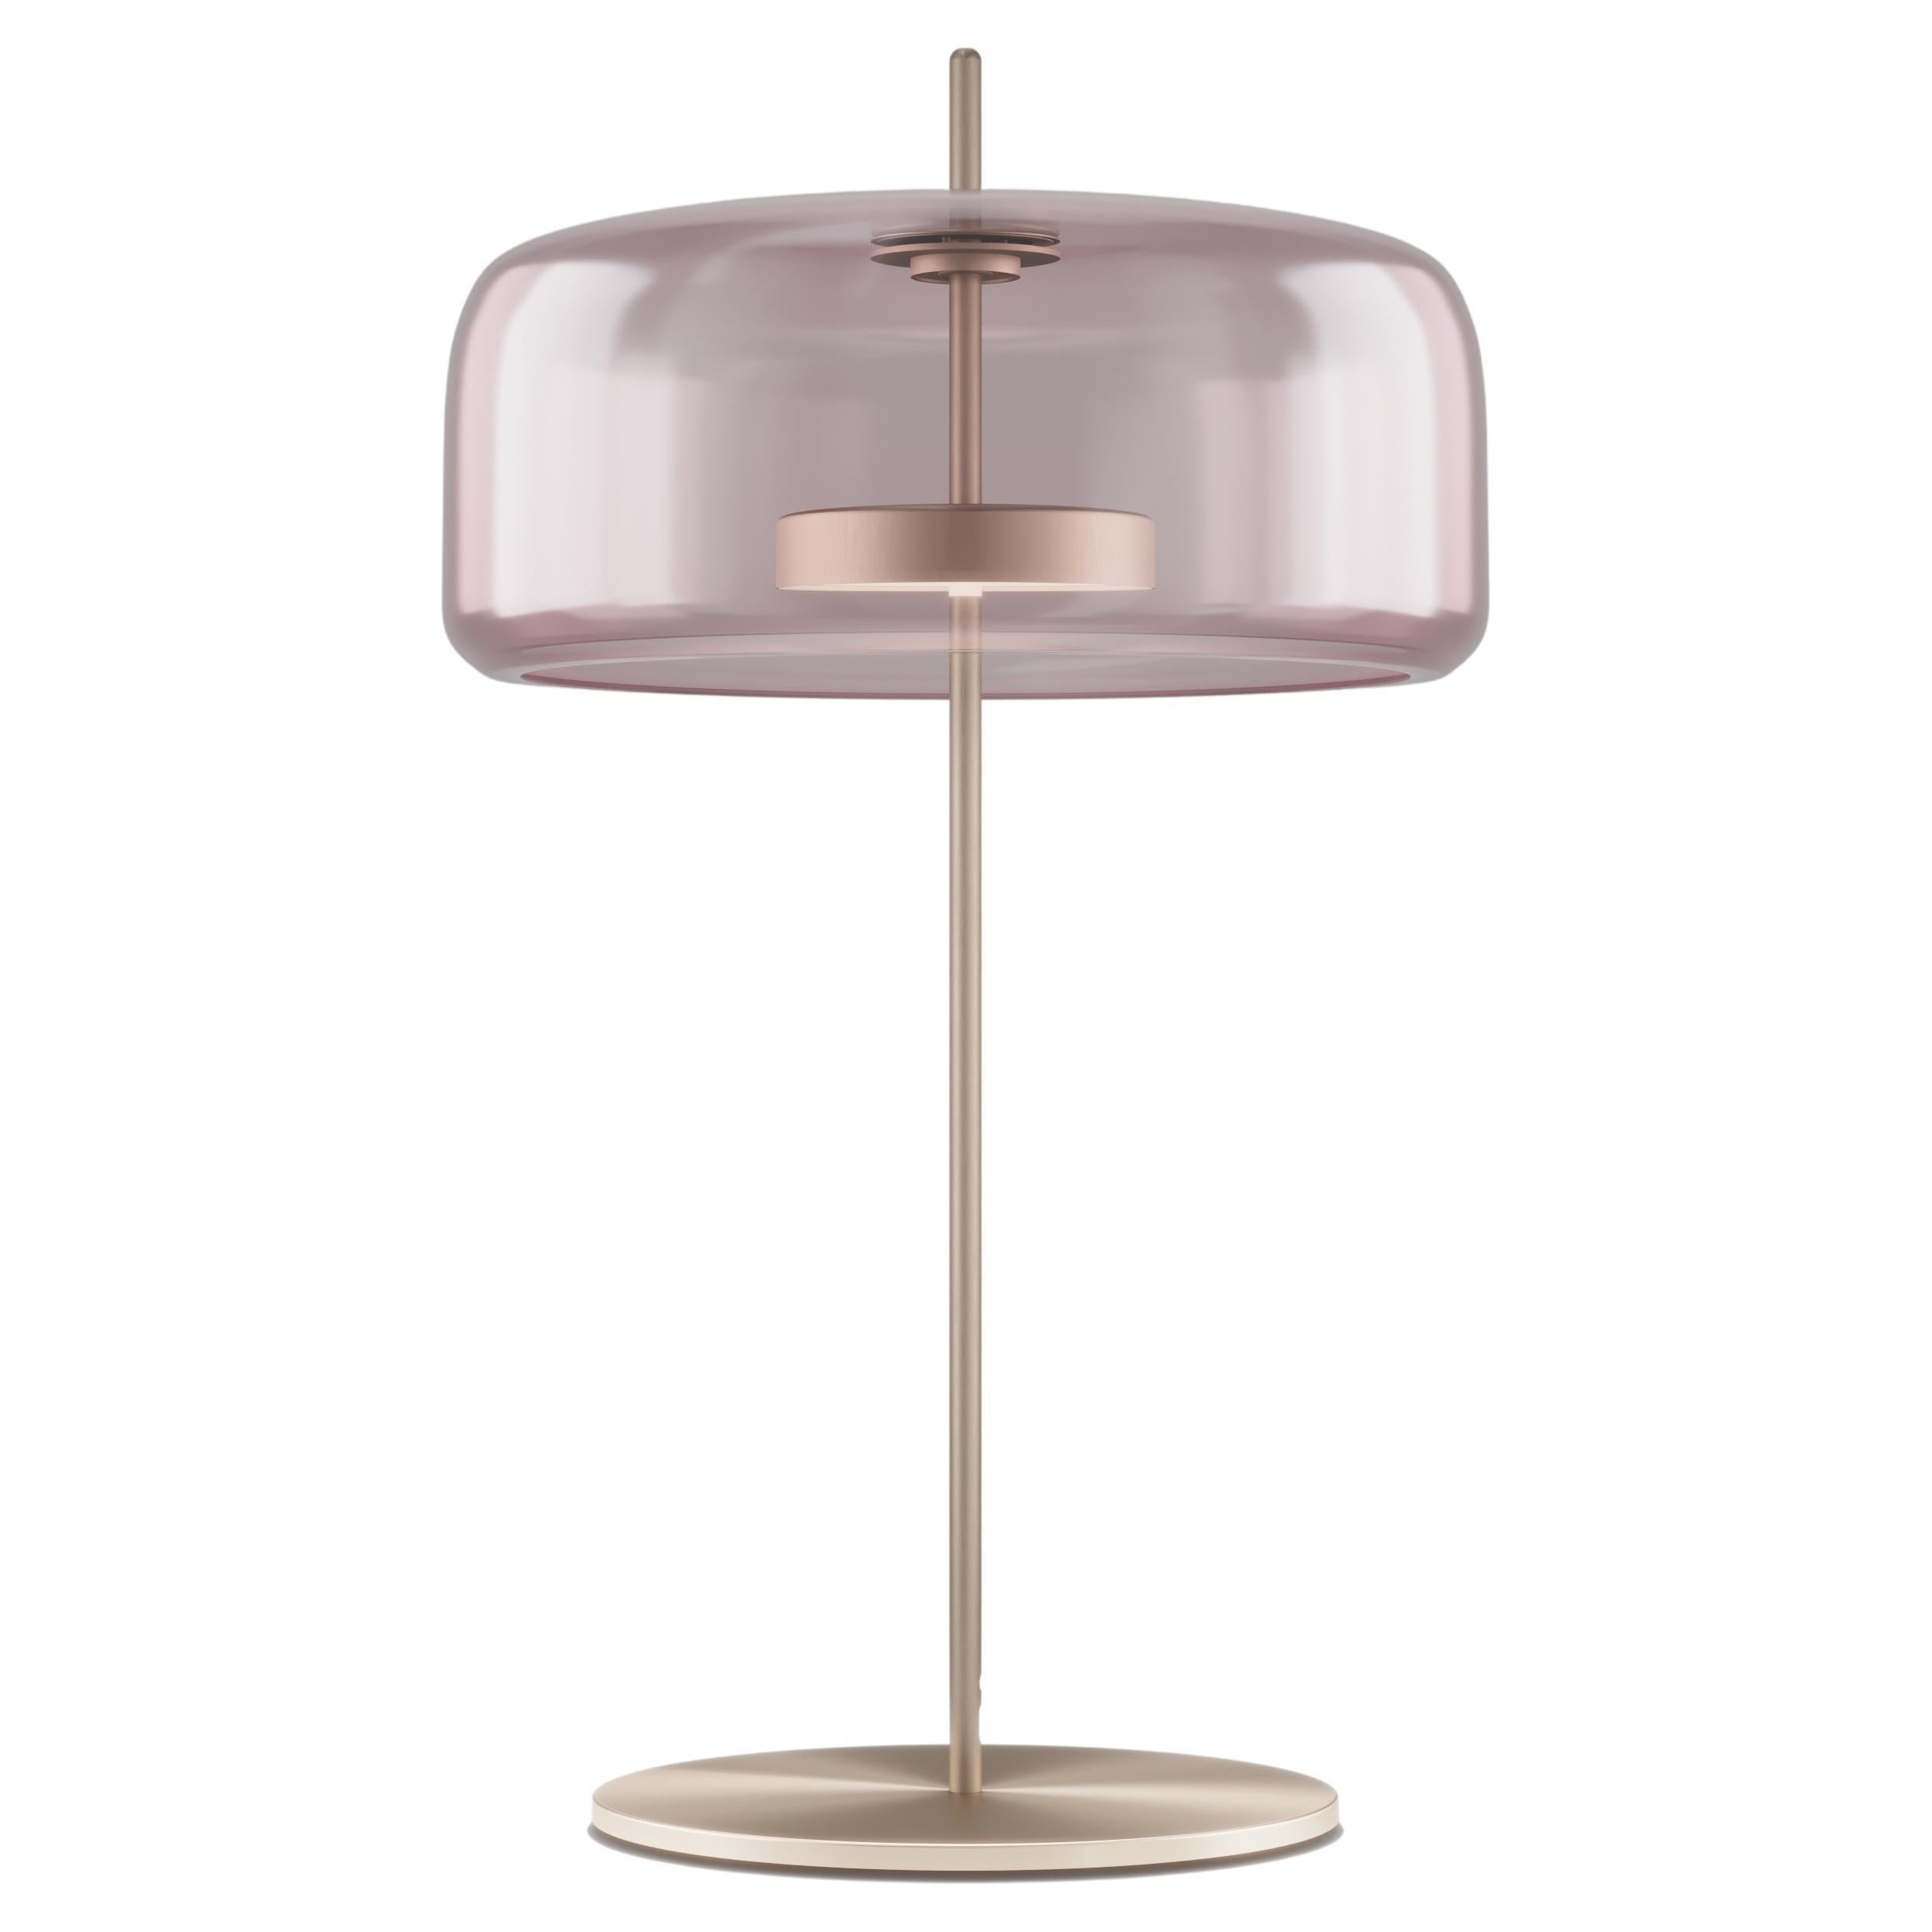 Vistosi Jube Table Lamp in Light Amethyst Transparent Glass And Matt Gold Finish For Sale